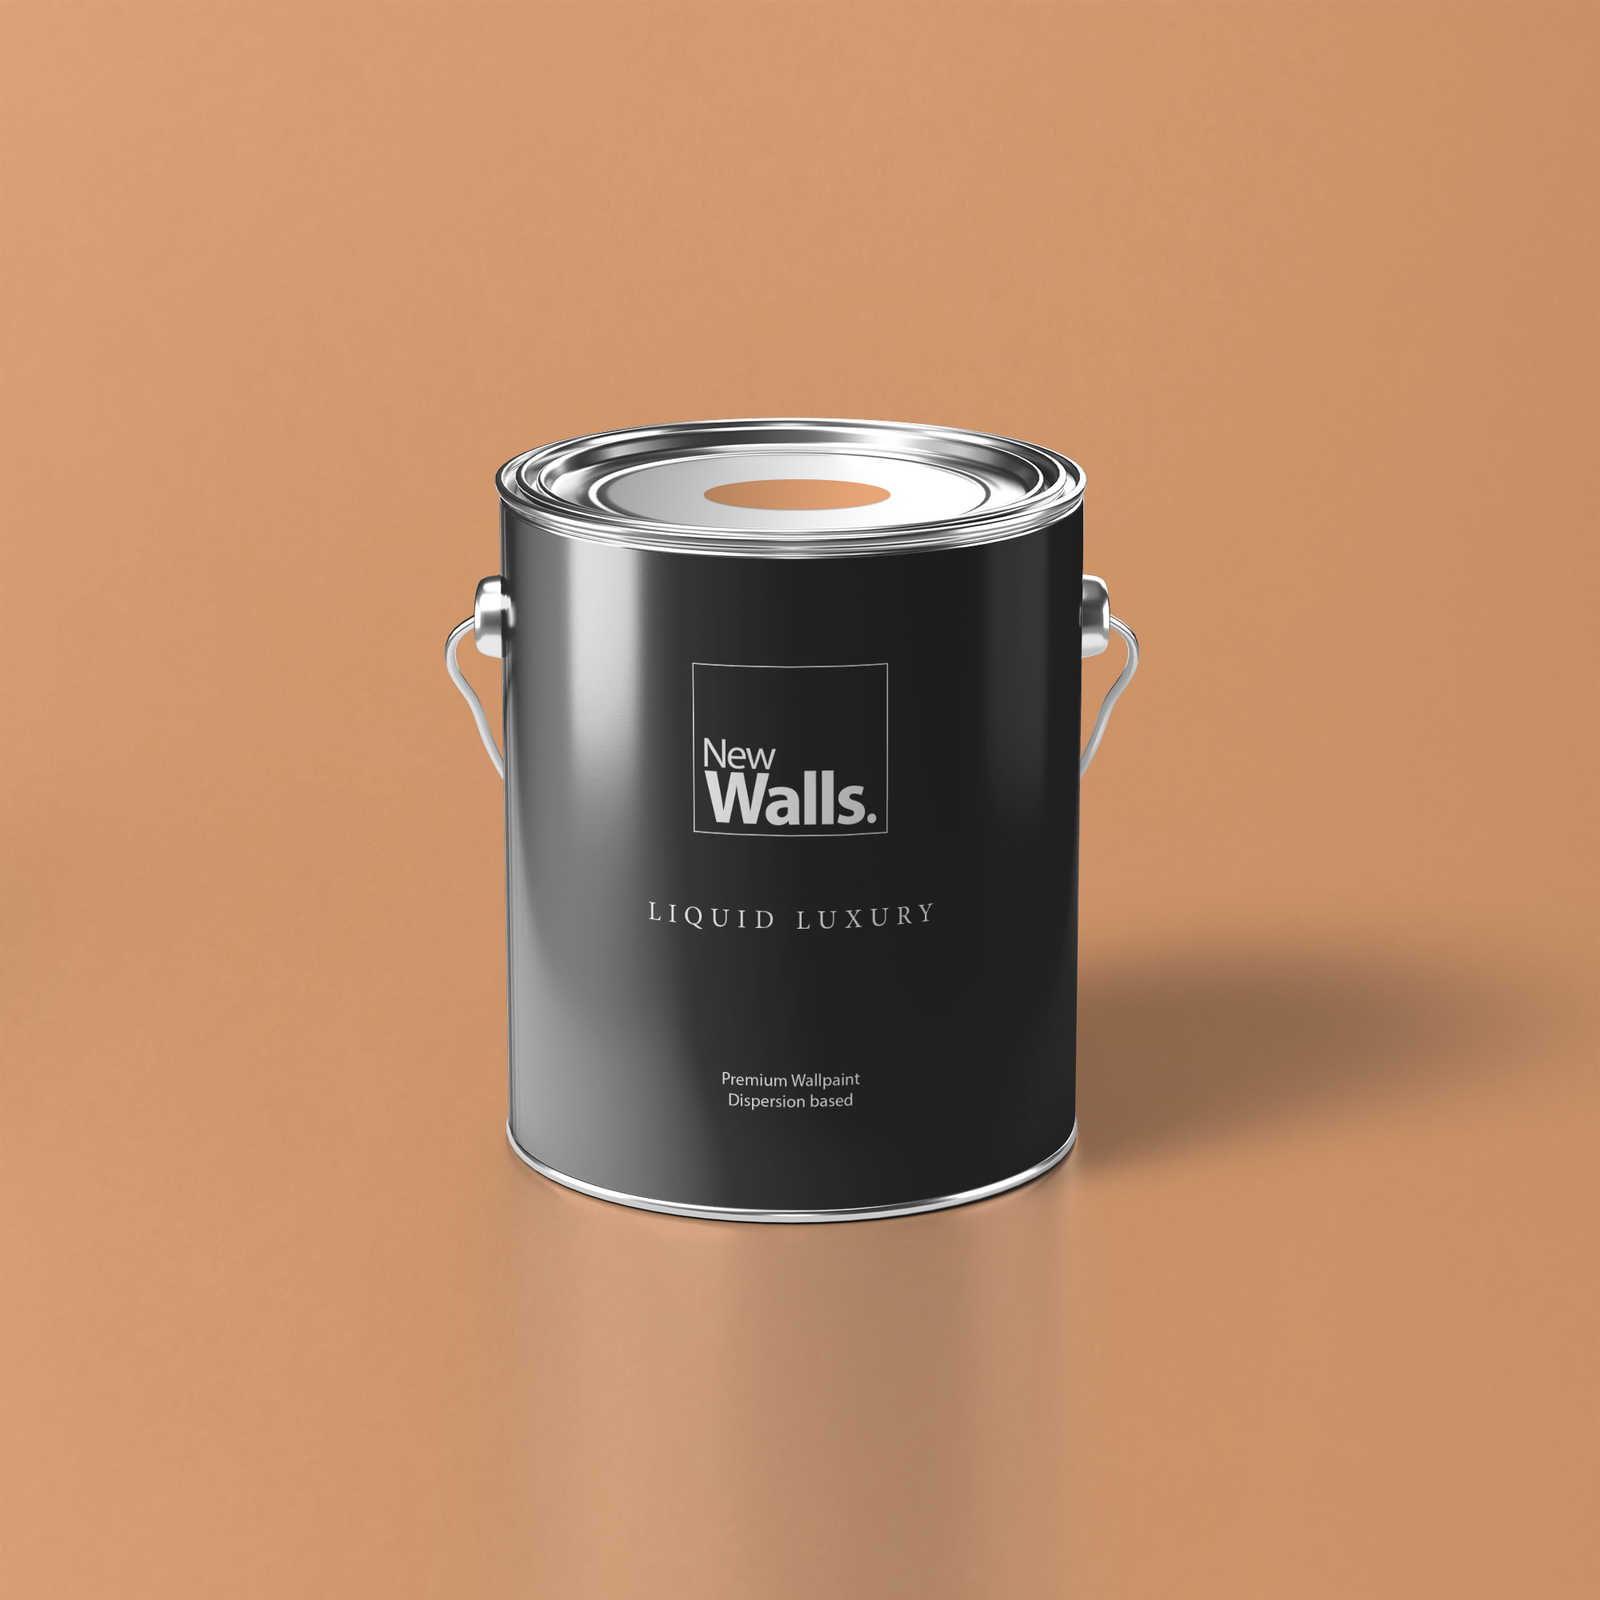 Premium Wall Paint Awakening Apricot »Pretty Peach« NW901 – 5 litre
